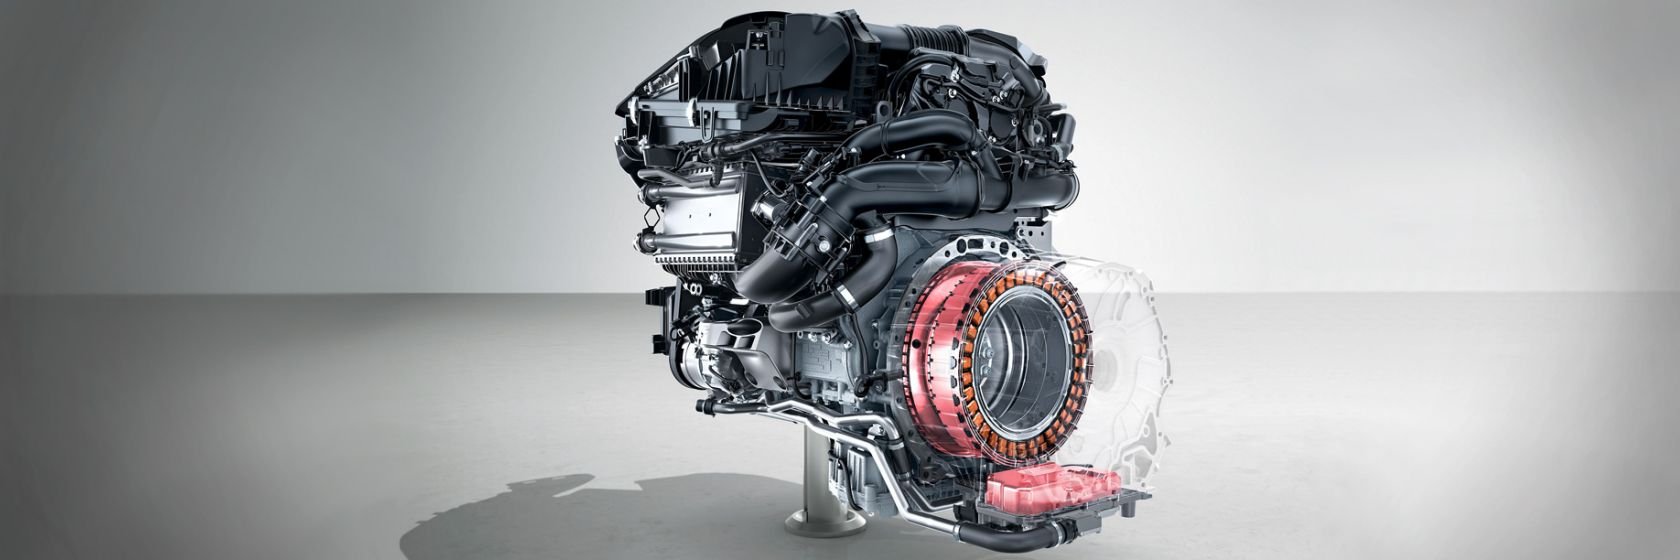 Технические характеристики моторов серии Mercedes M104